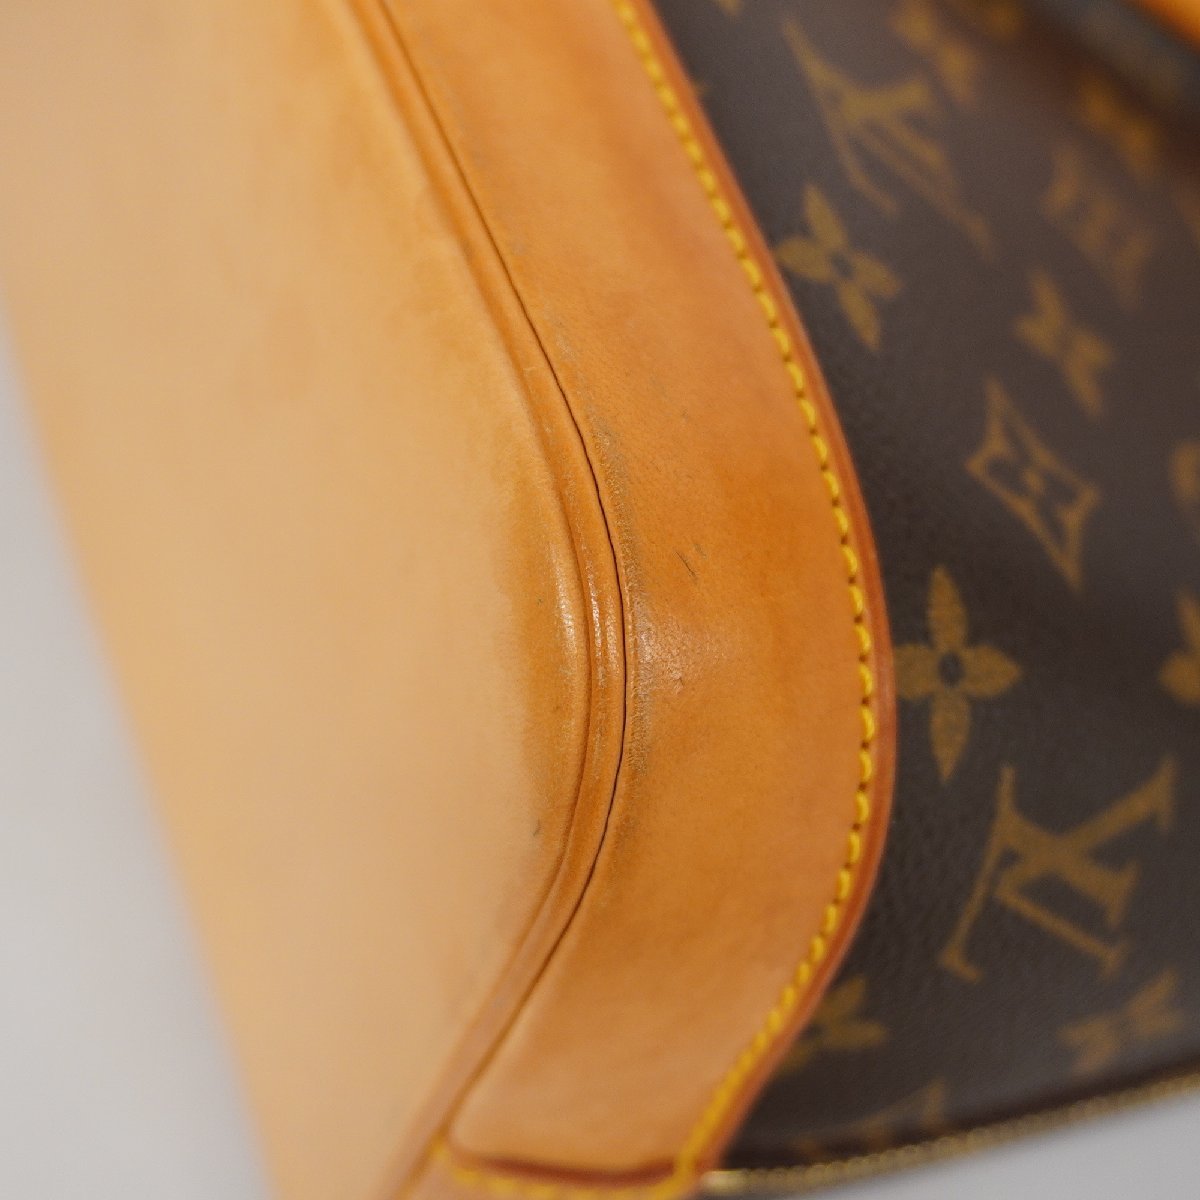 Louis Vuitton Alma PM Handbag Monogram M51130